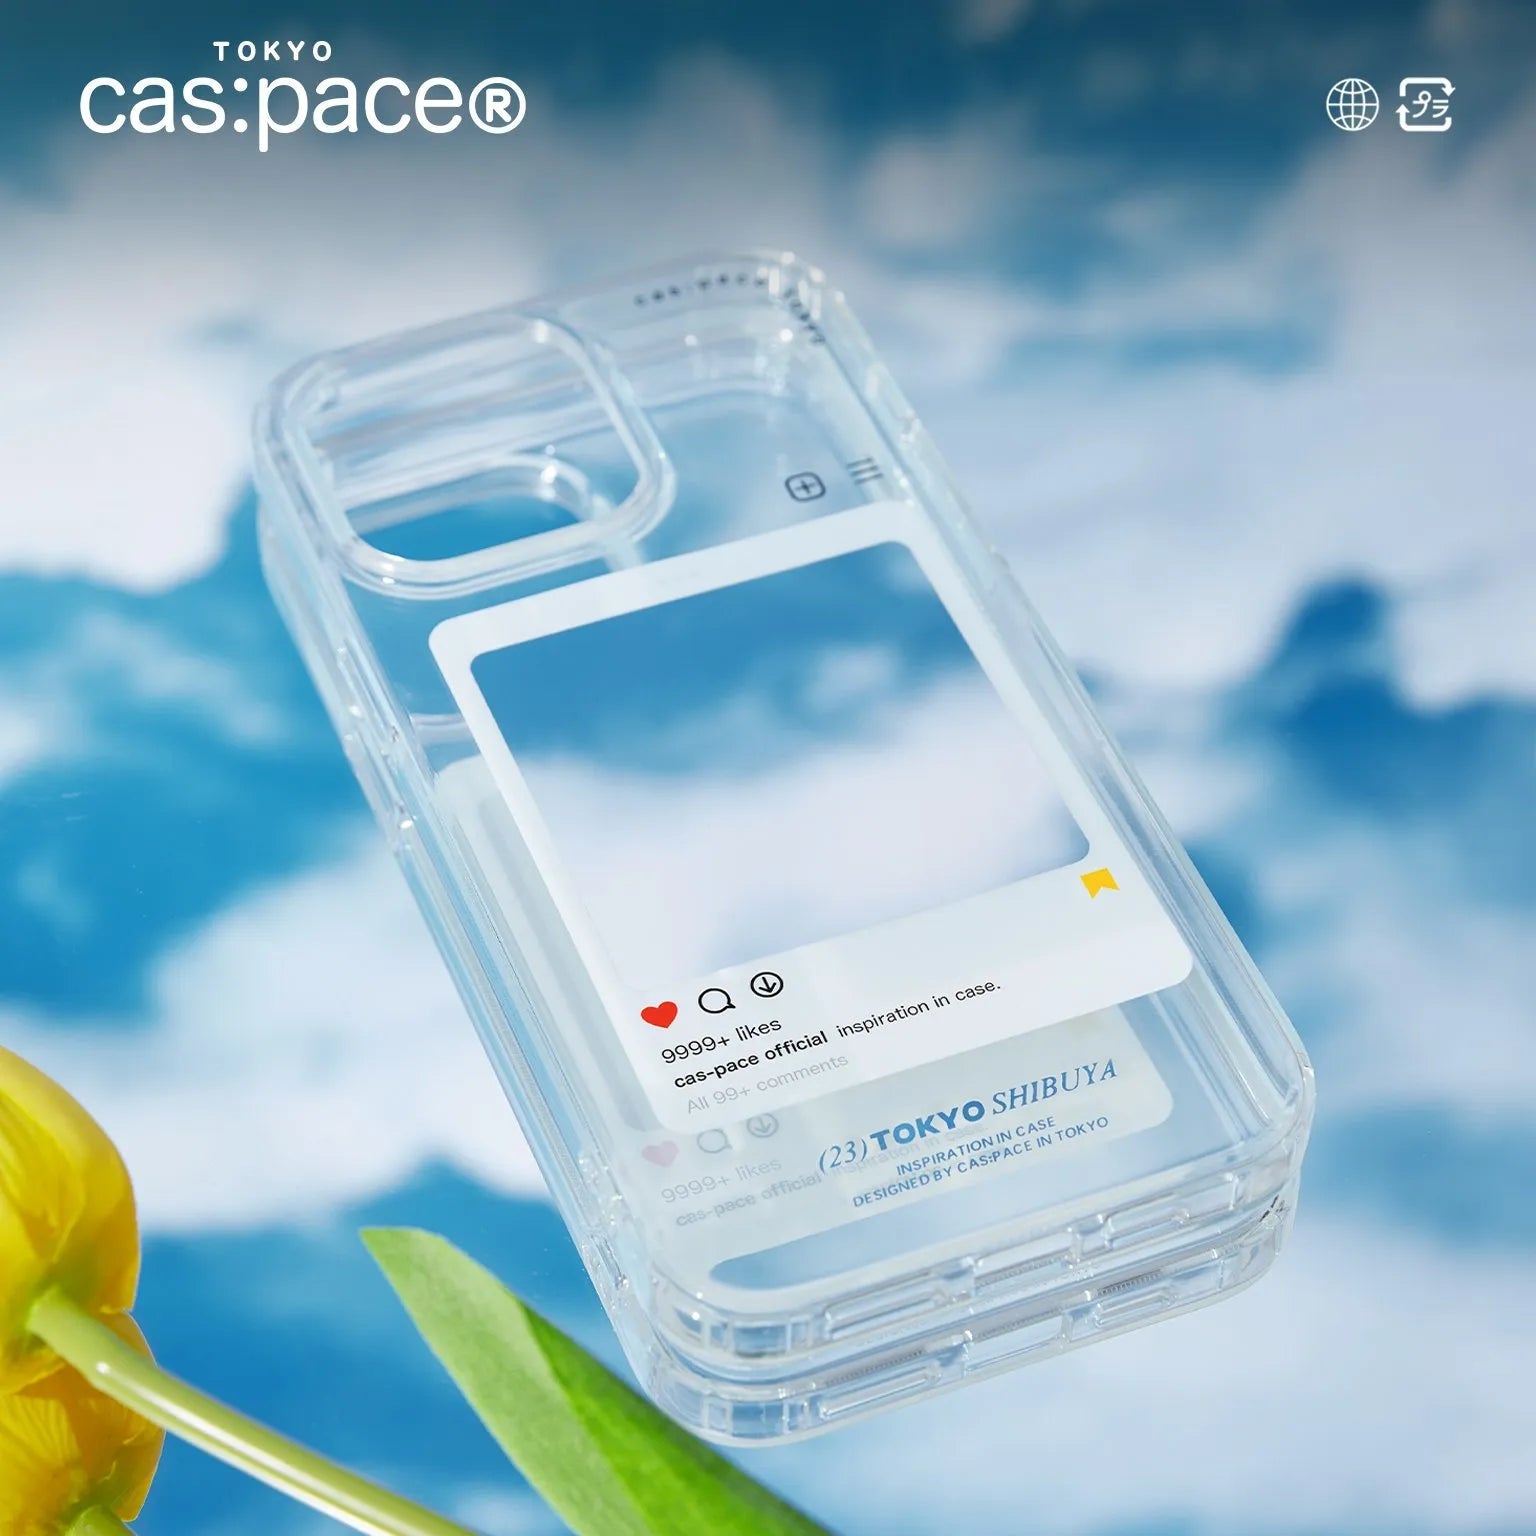 cas:pace 23S/S「ins mirror」携帯ケース - cas:pace 殼空間